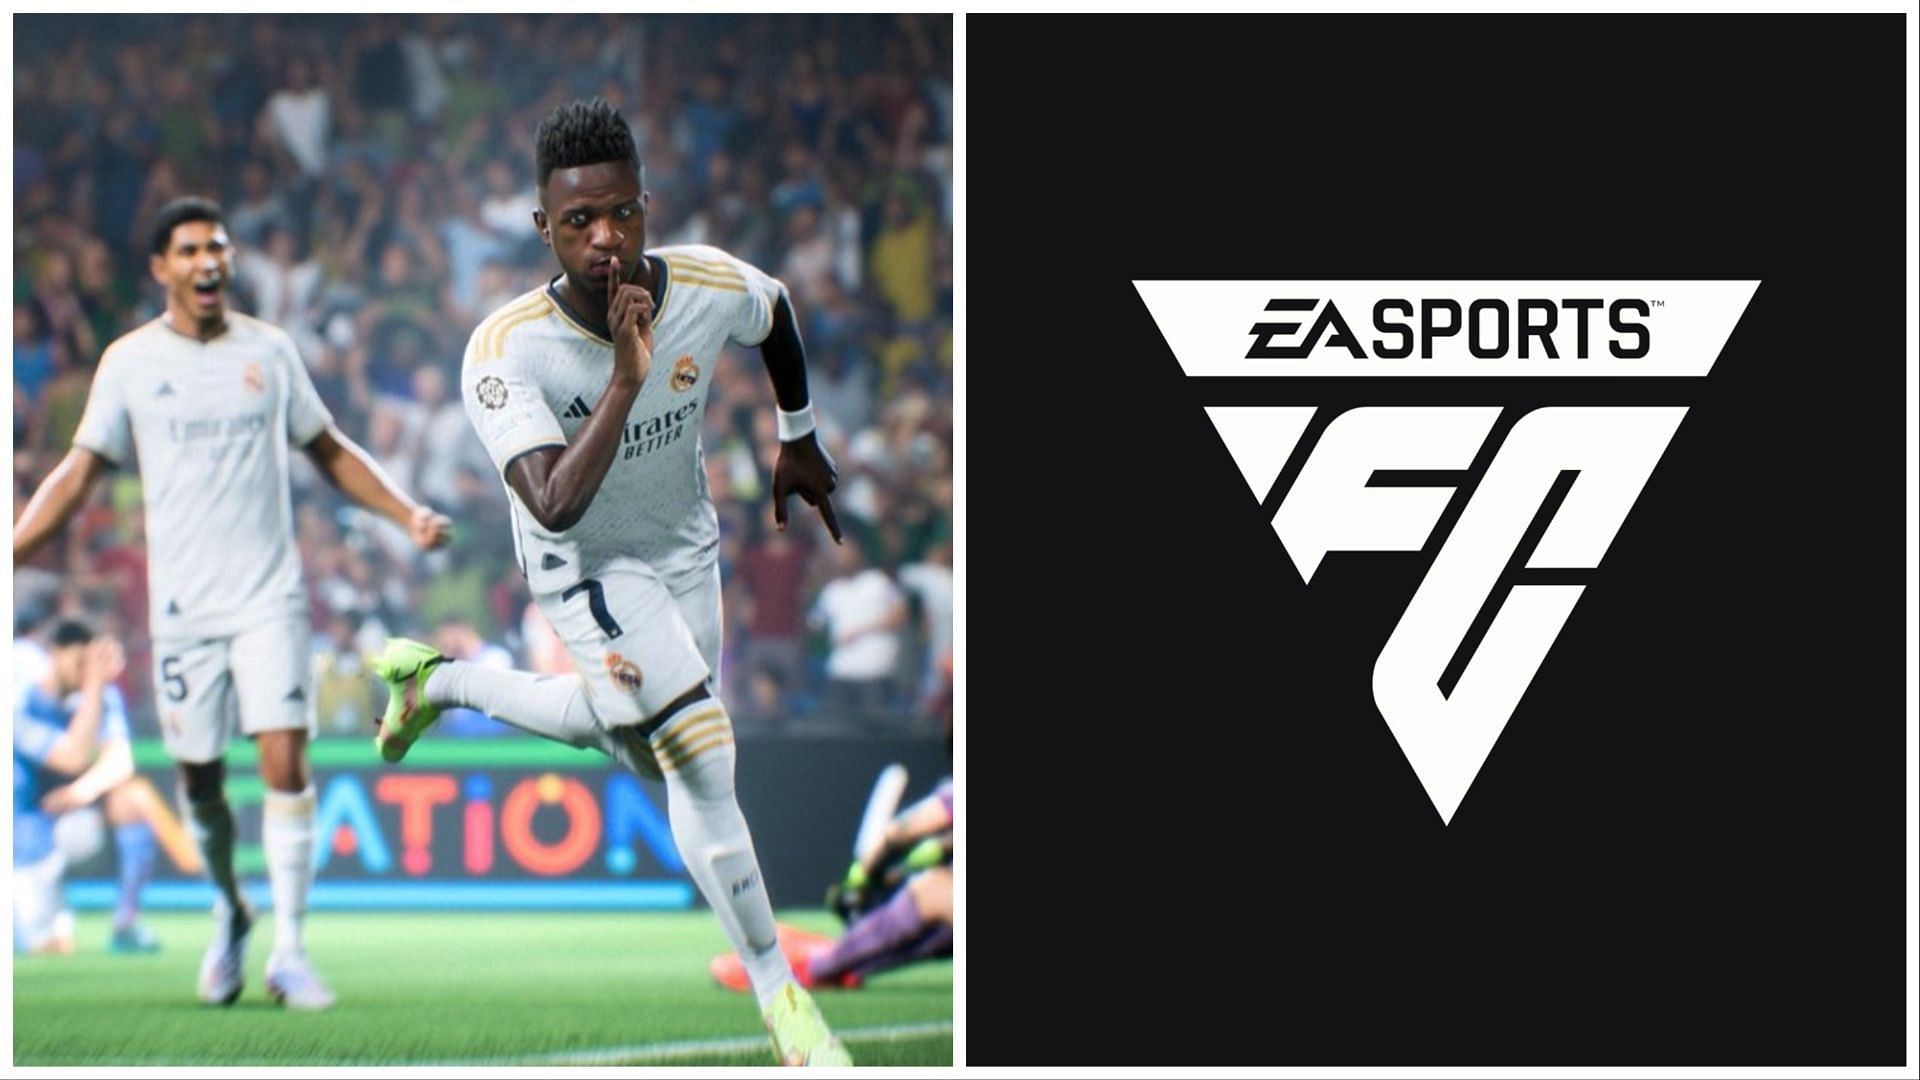 PS5 EA Sports FC 24 Bundle Pre-Order Dates Announced